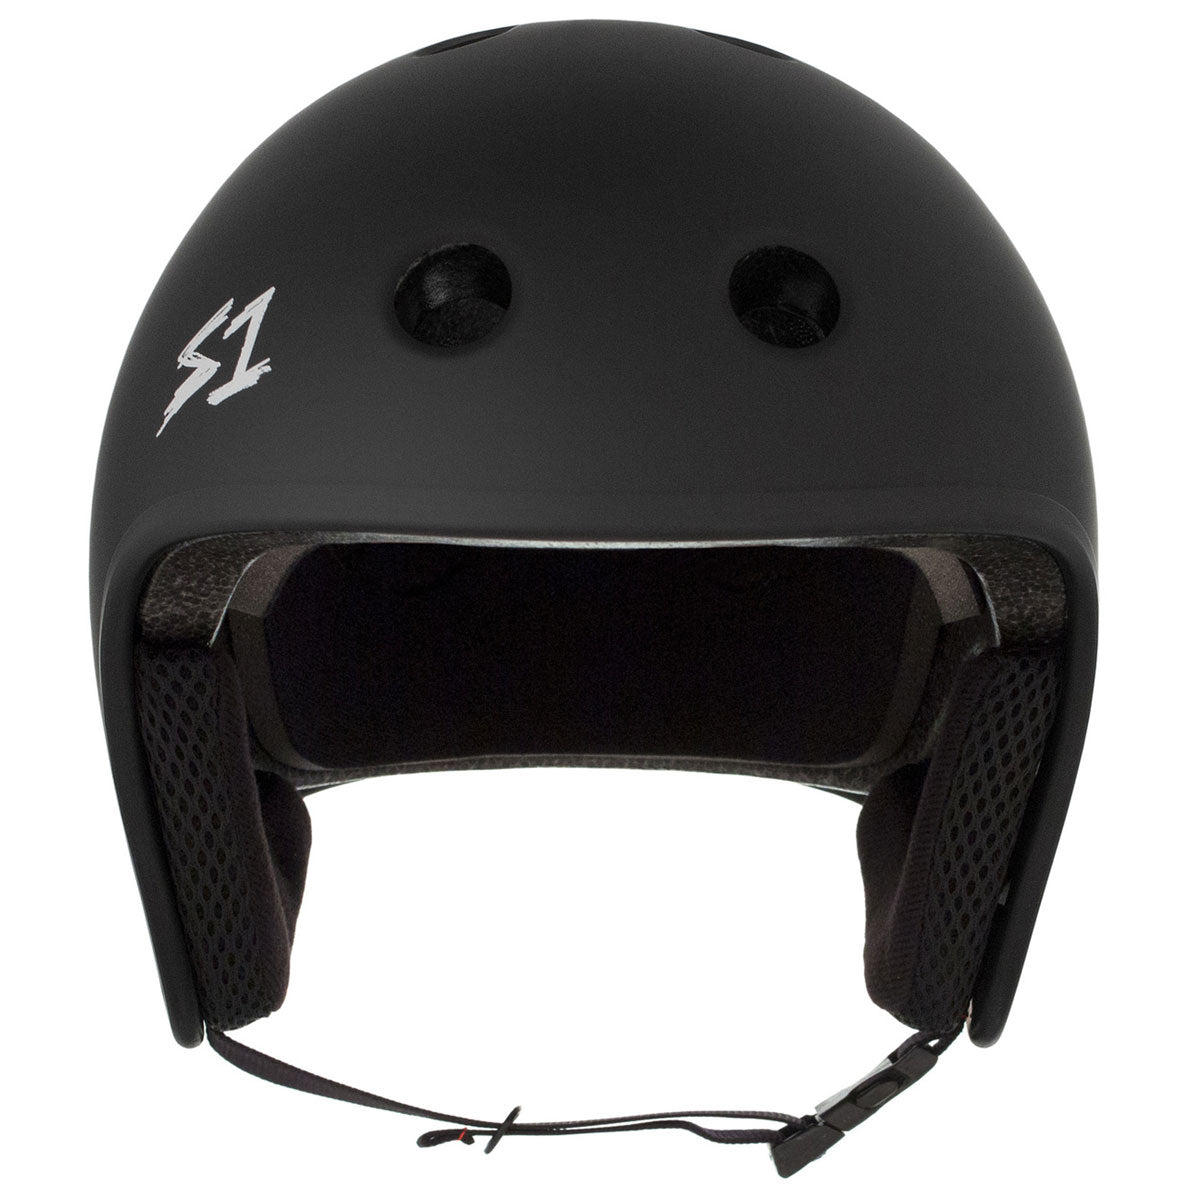 S-One Lifer Retro Helmet - Black Matte image 3